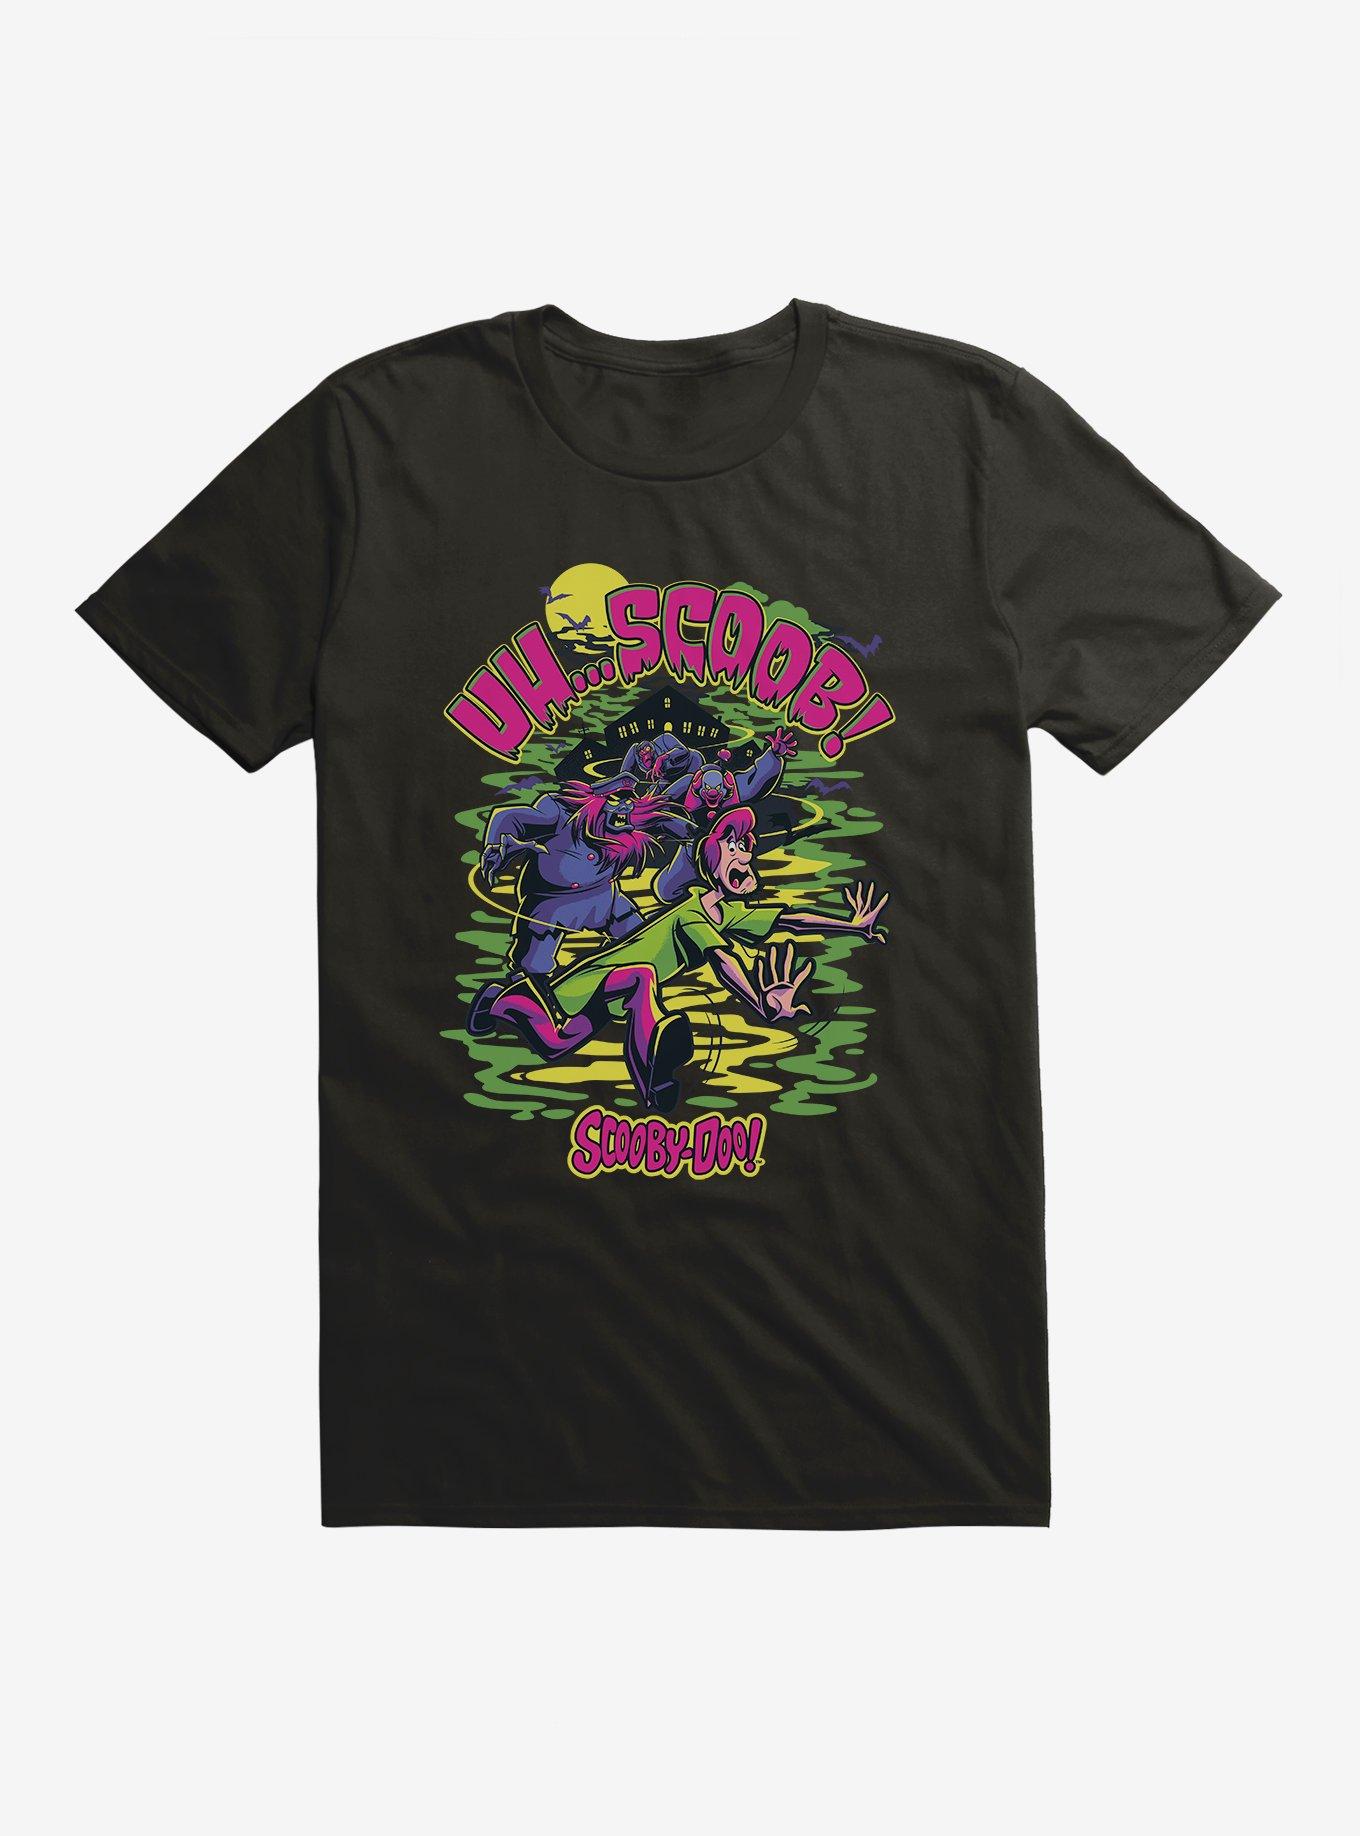 Scooby-Doo Uh?Scoob! Shaggy On The Run T-Shirt